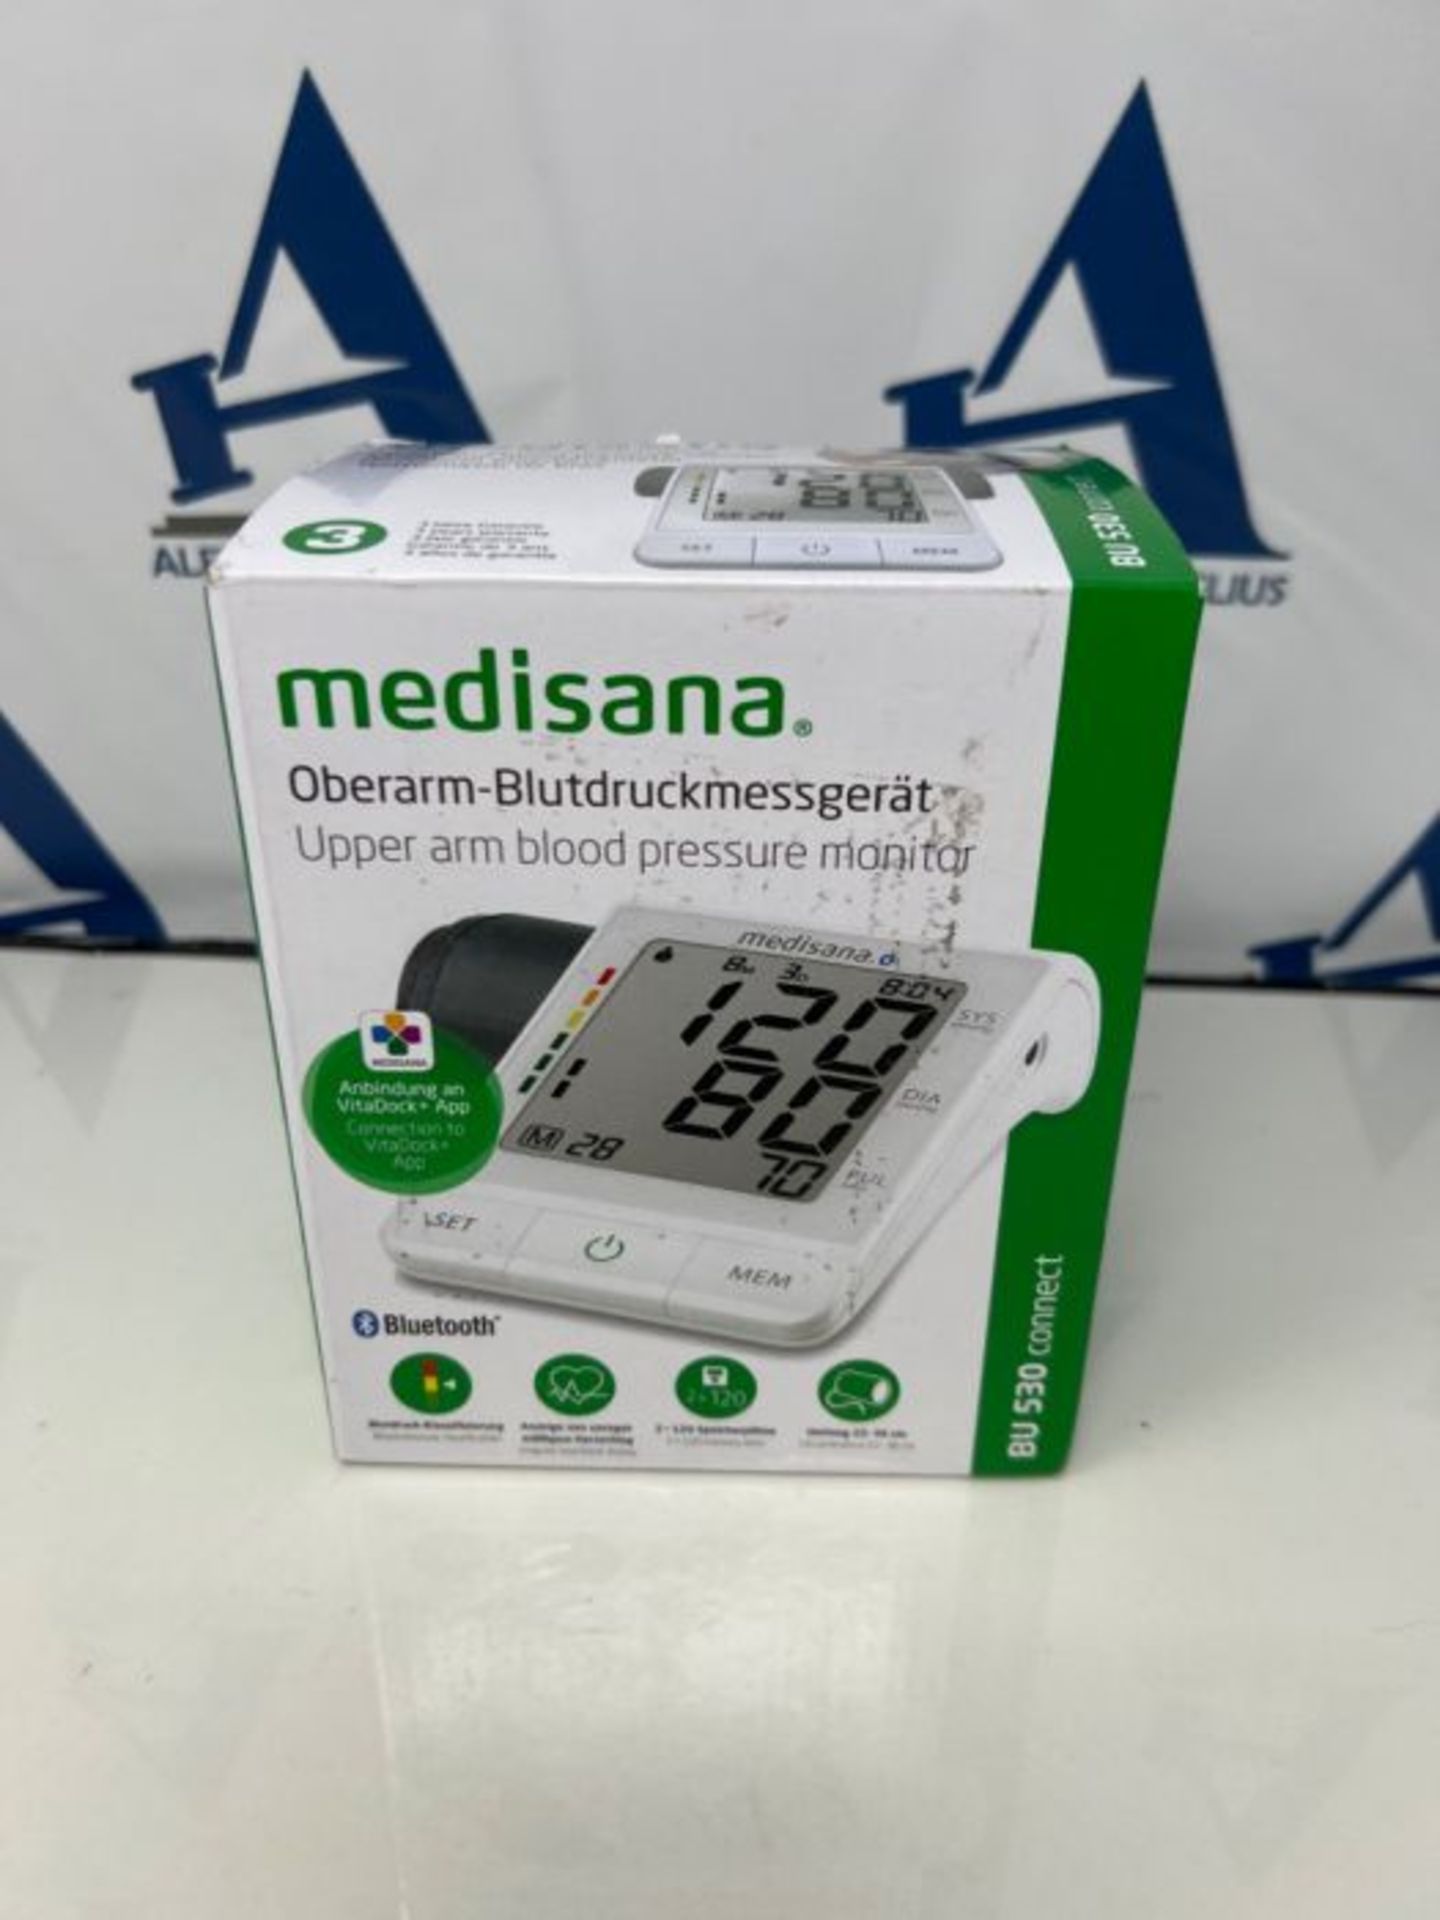 Medisana BU 530 Bluetooth Digital Upper Arm Blood Pressure Monitor - Home Use Heartbea - Image 2 of 3